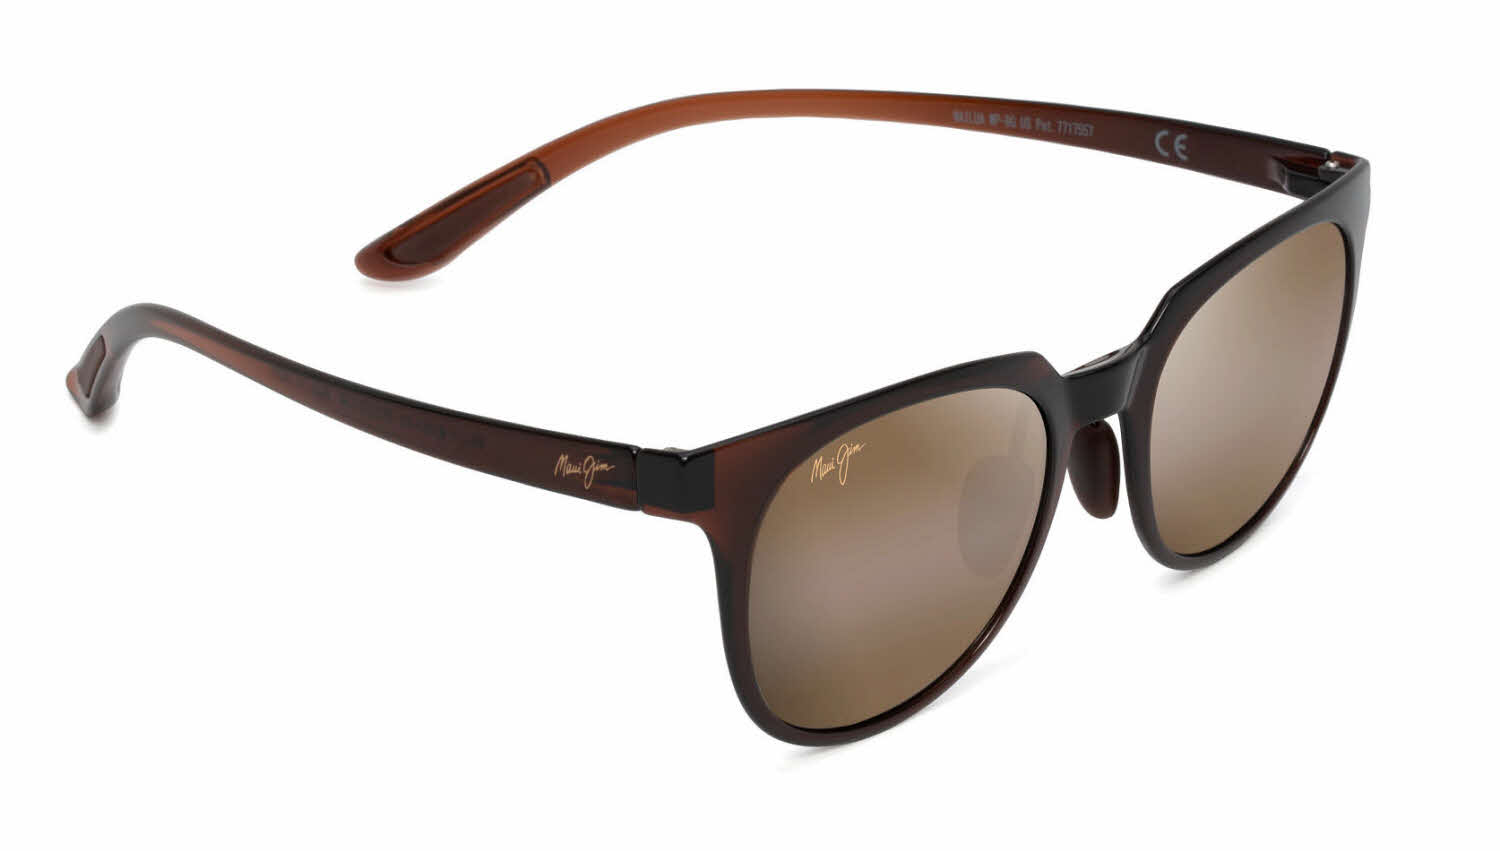 Wailua-454 Sunglasses